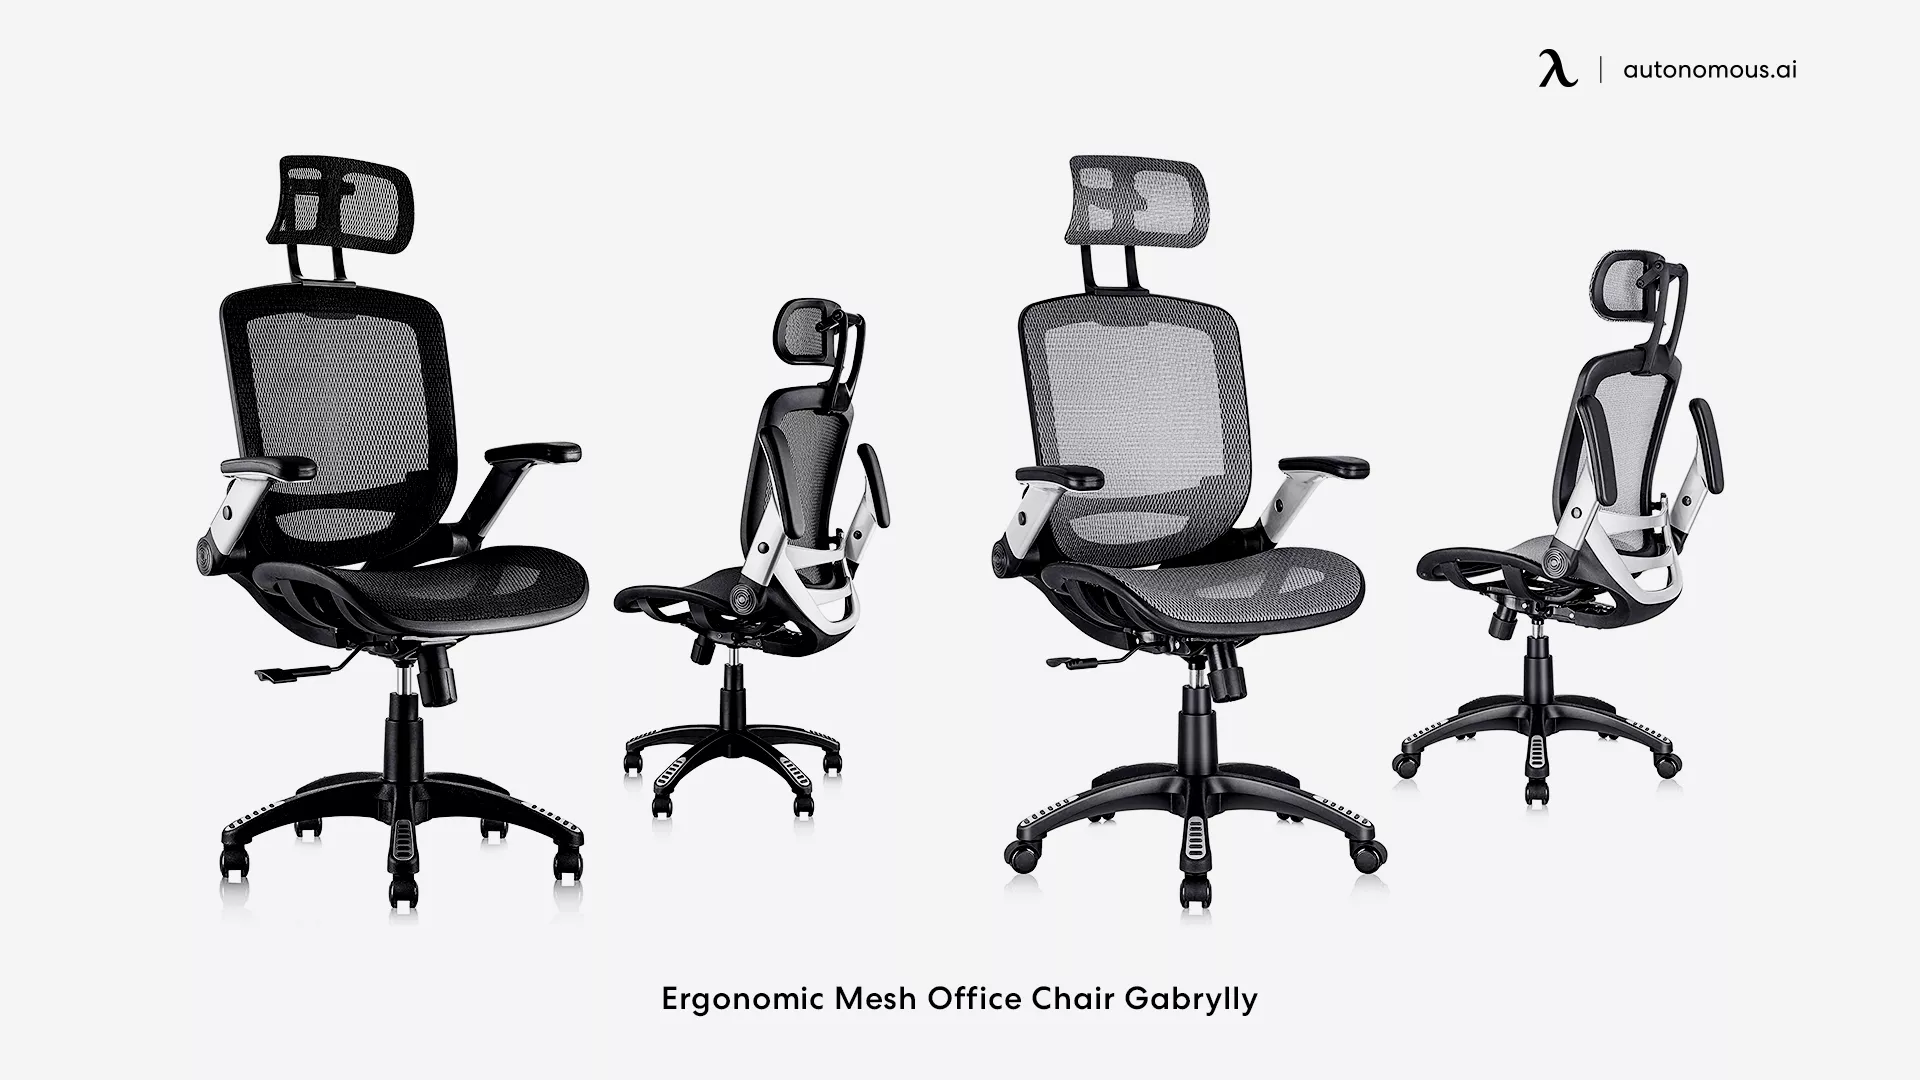 Ergonomic Mesh Office Chair Gabrylly